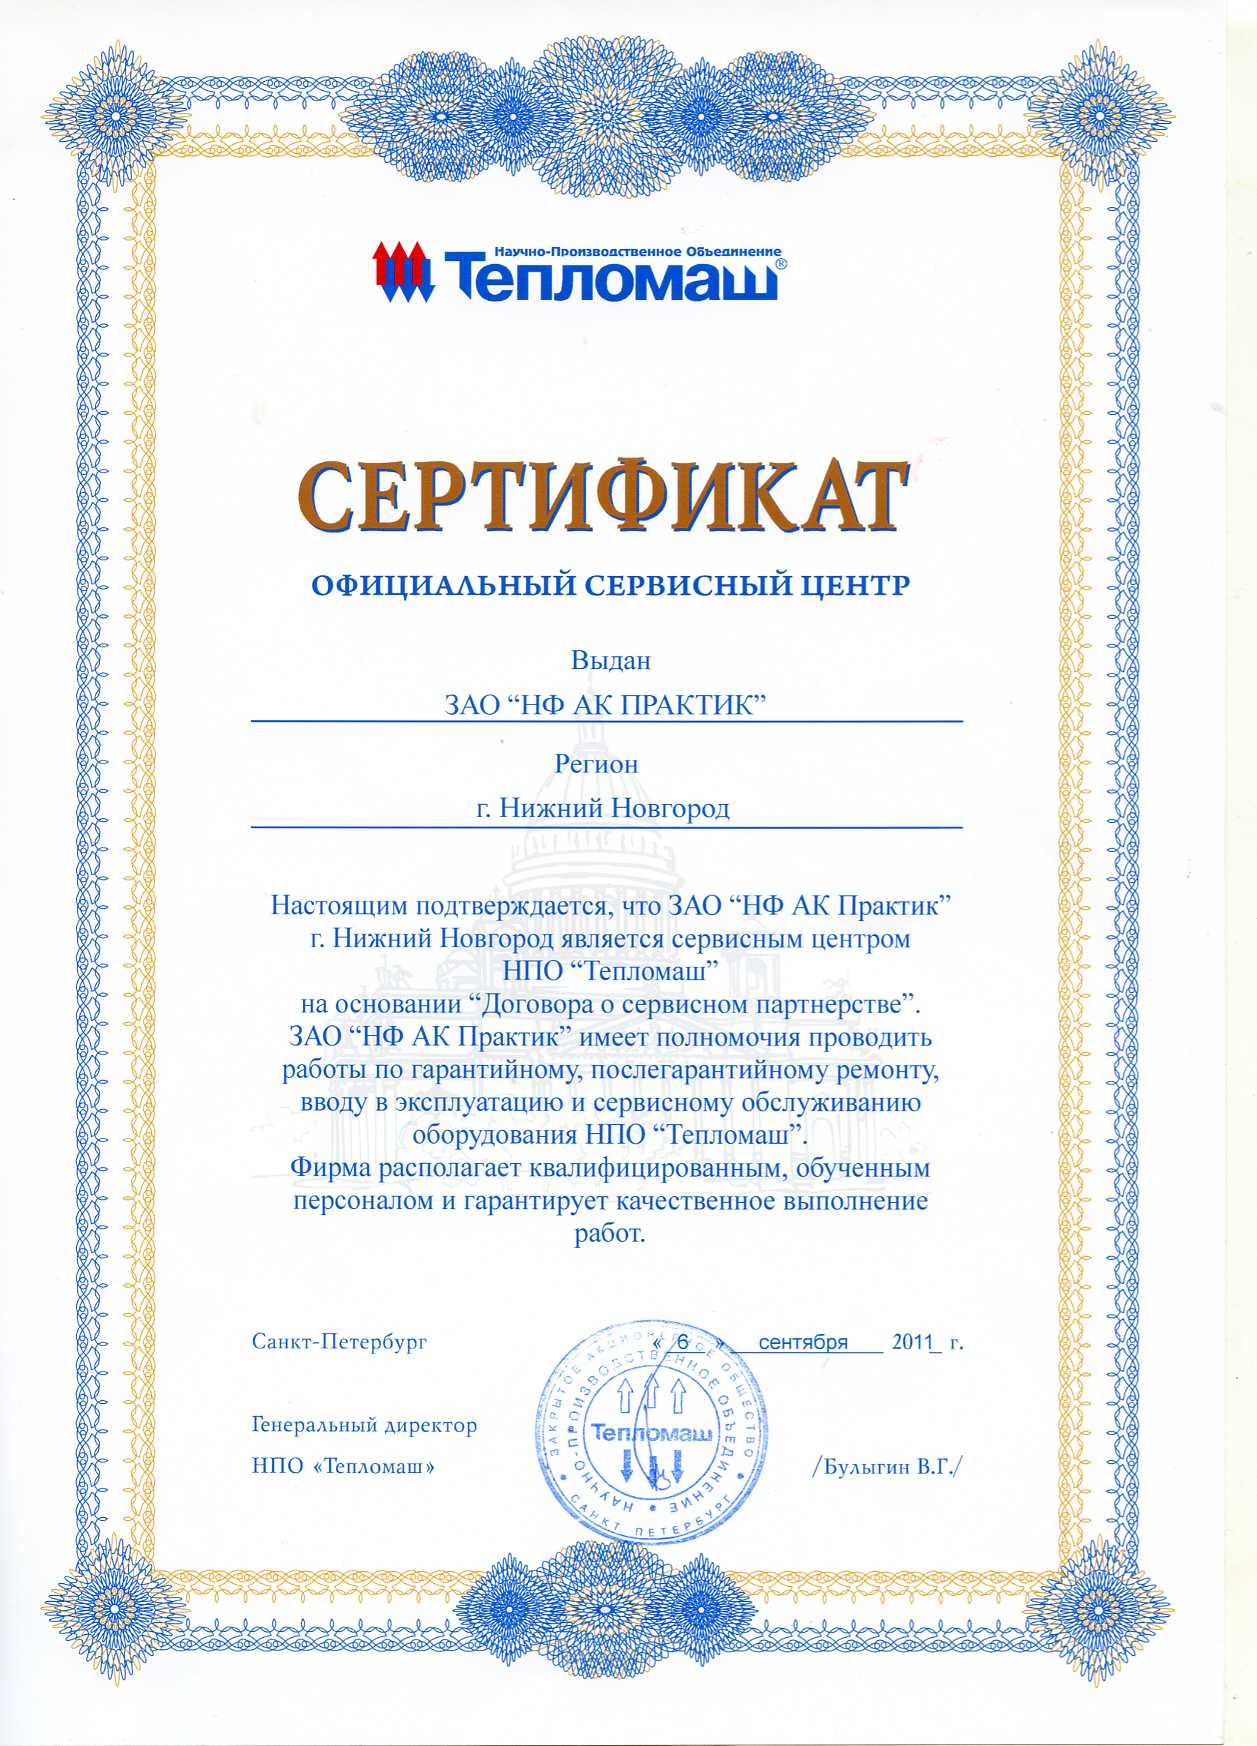 Сертификат официального сервисного центра НПО "Тепломаш"